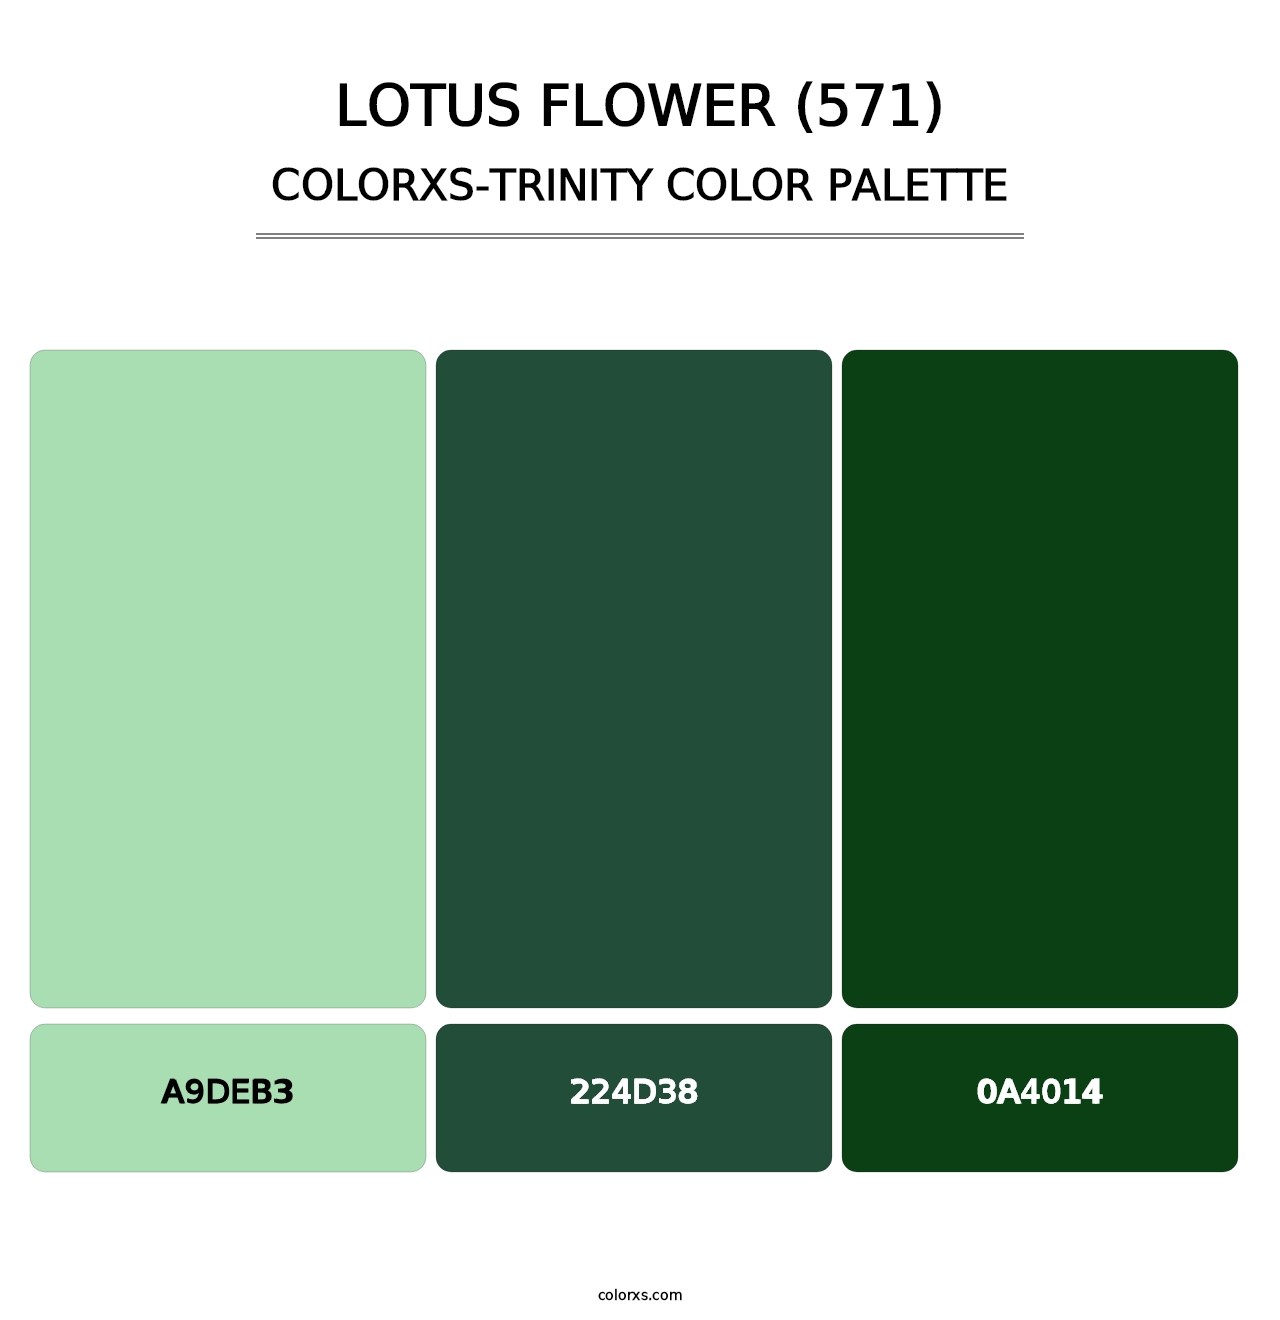 Lotus Flower (571) - Colorxs Trinity Palette